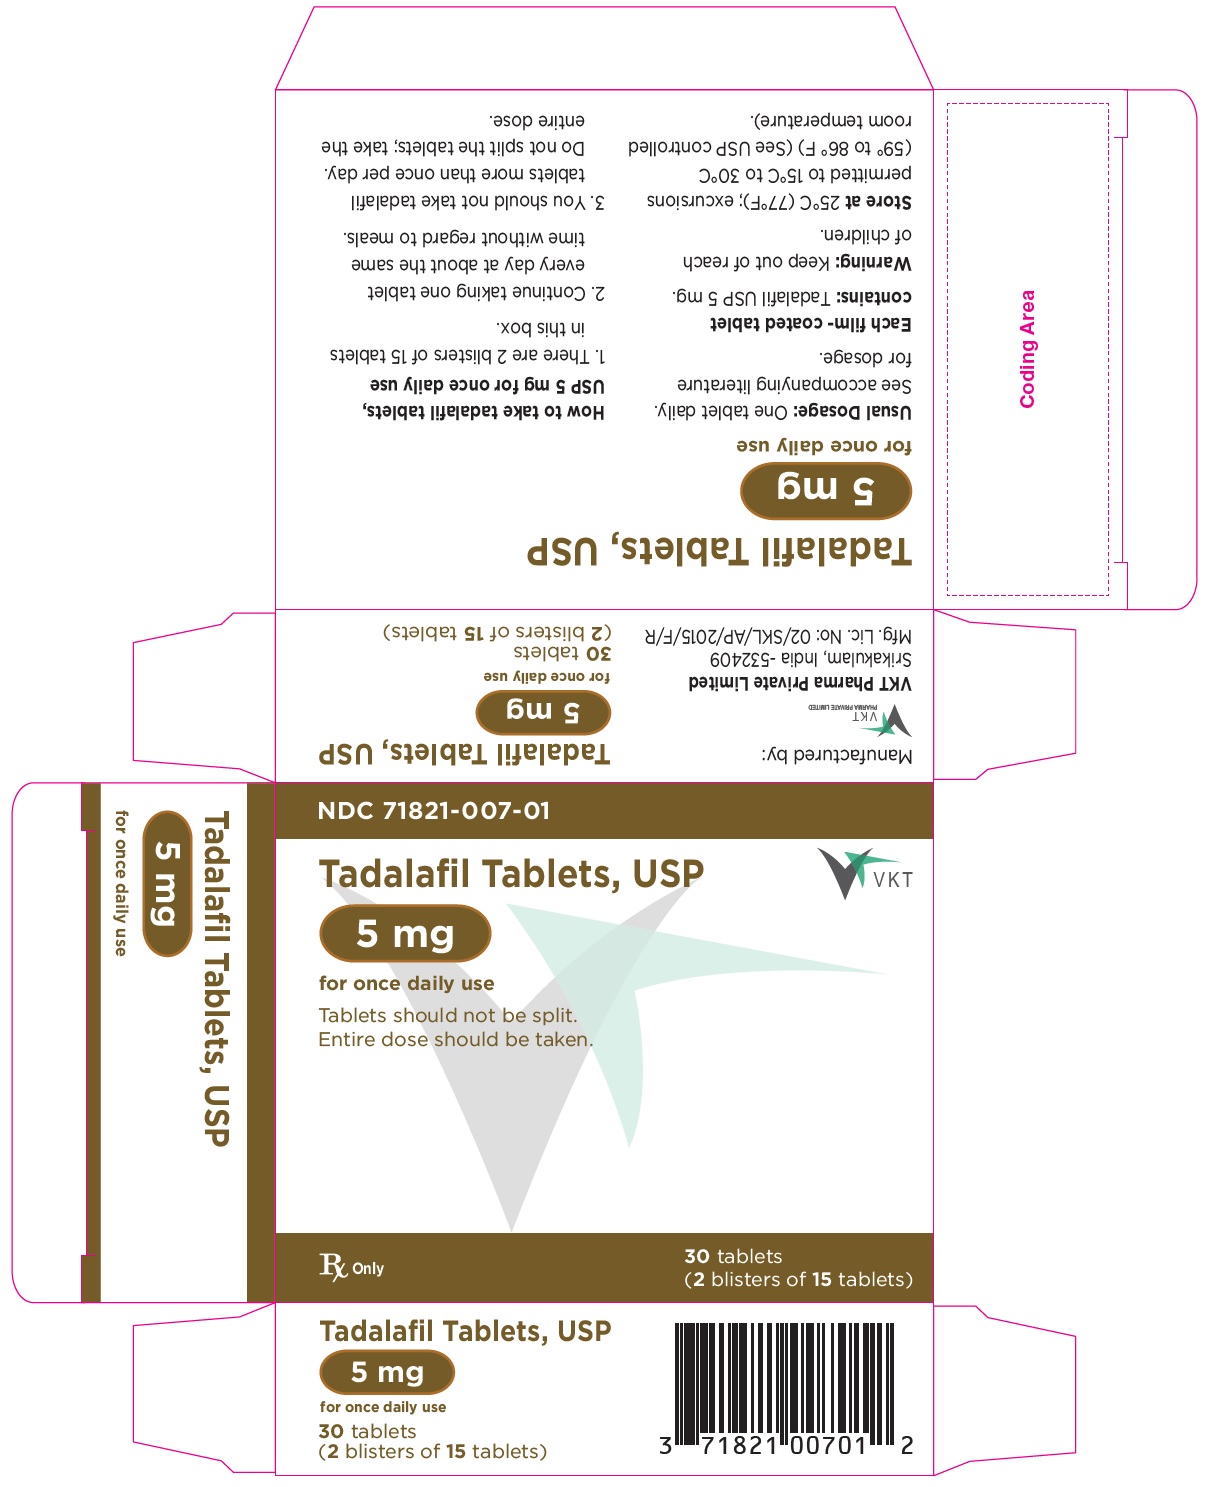 Tadalafin tablets,USP,5 mg - NDC-71821-007-01 - Carton Label